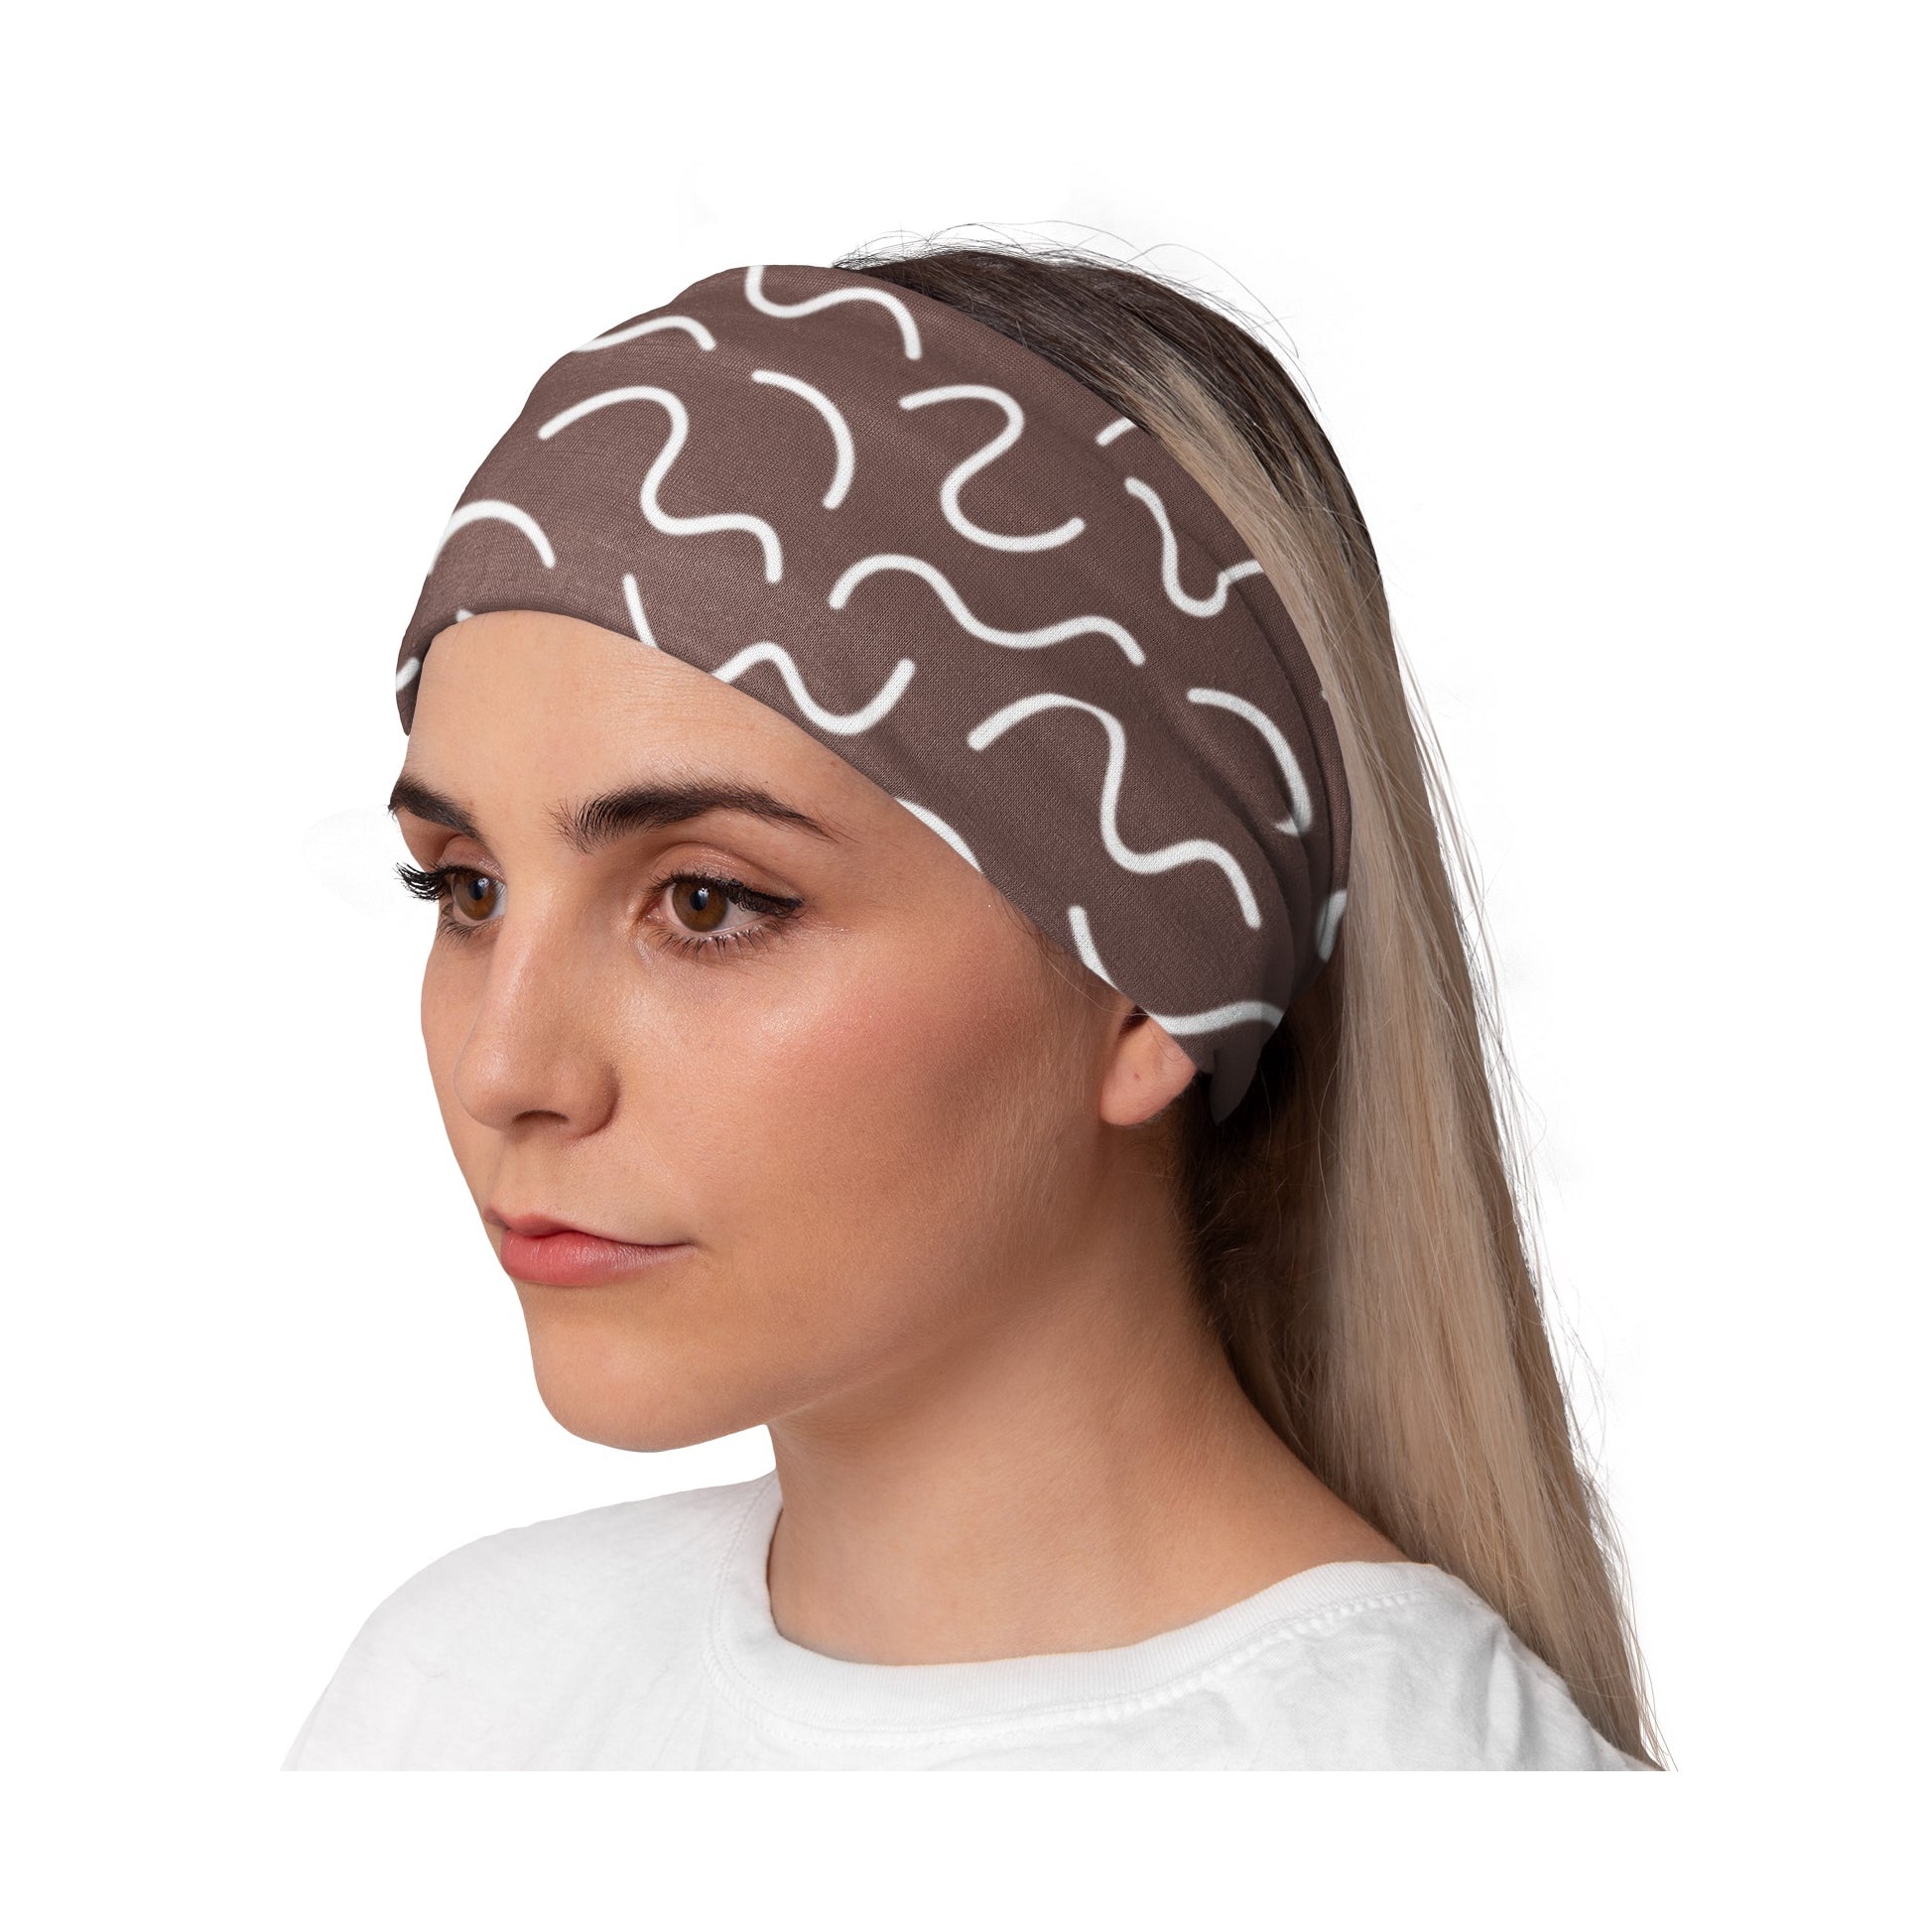 Lunabands Brown & White Core Multi use Running Bandana Headband